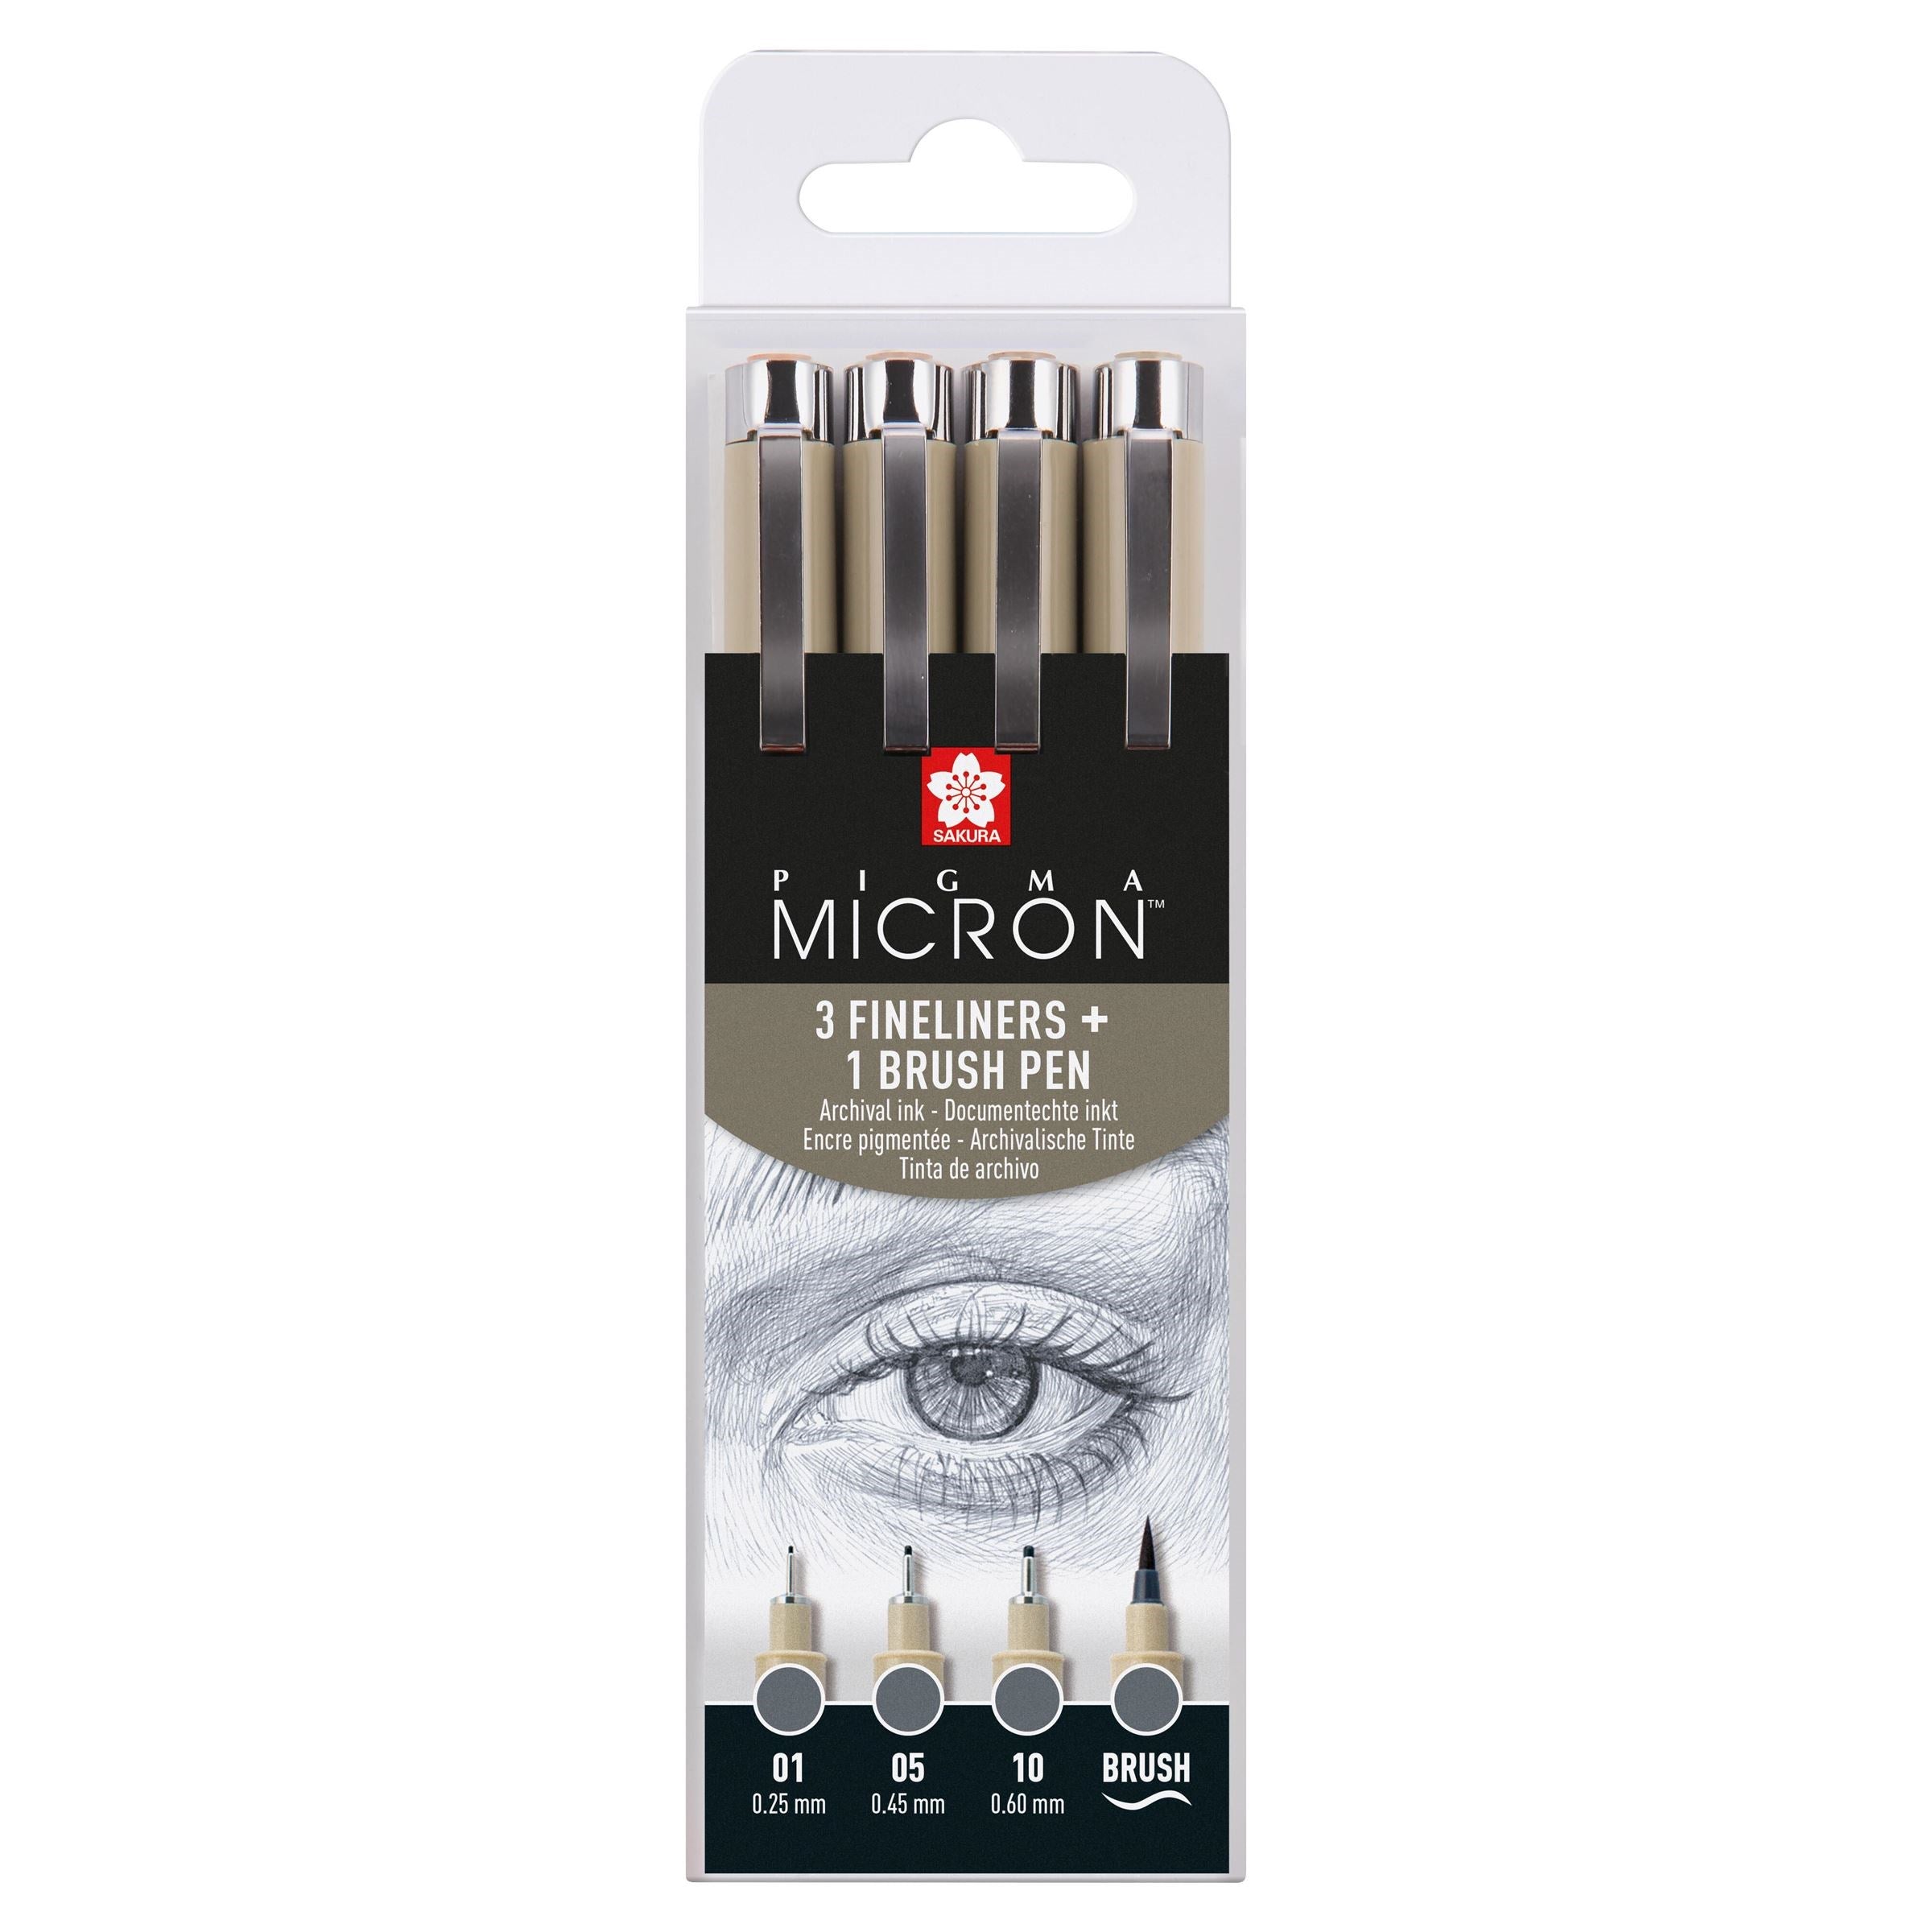 Pigma Micron fineliner set | 4 sizes, Cool Gray